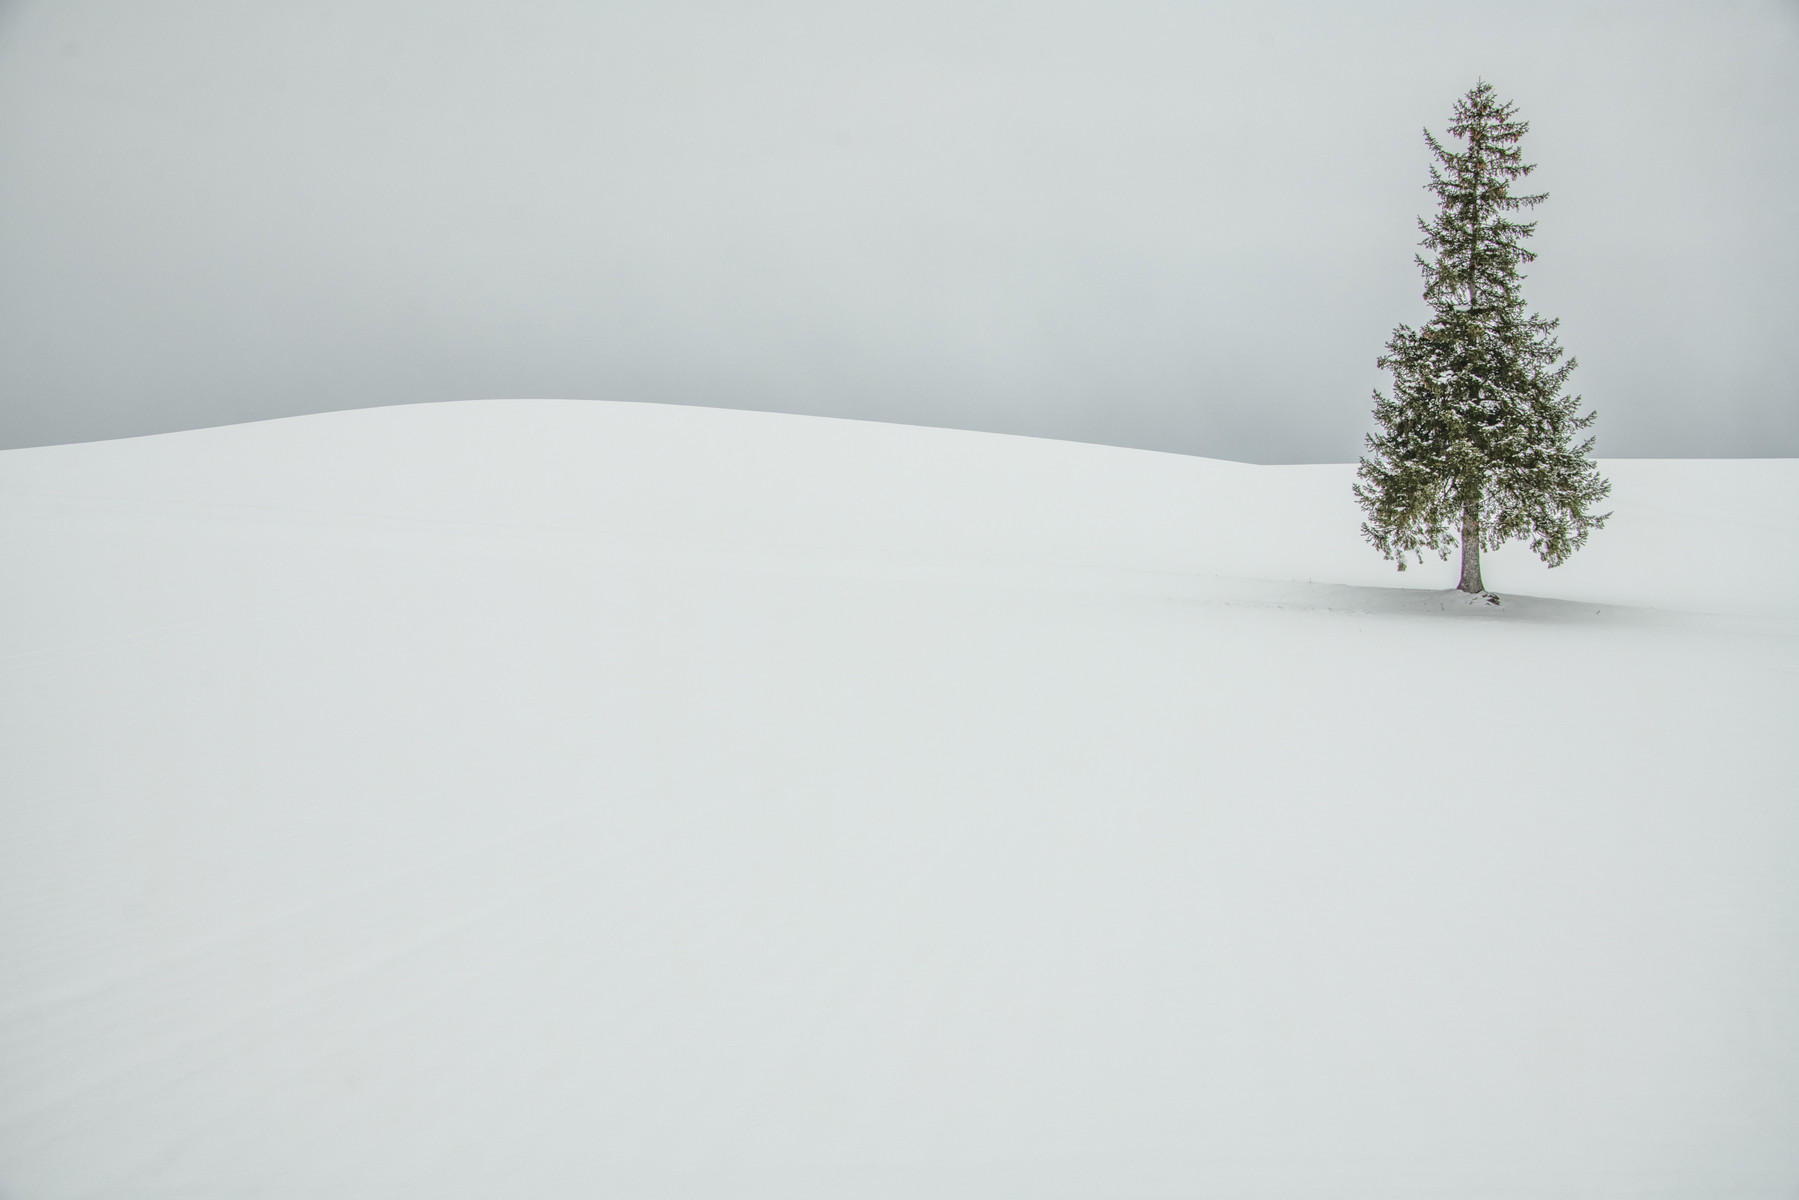 Solo Pine : Japan, Hokkaido, Snowbound : ELIZABETH SANJUAN PHOTOGRAPHY